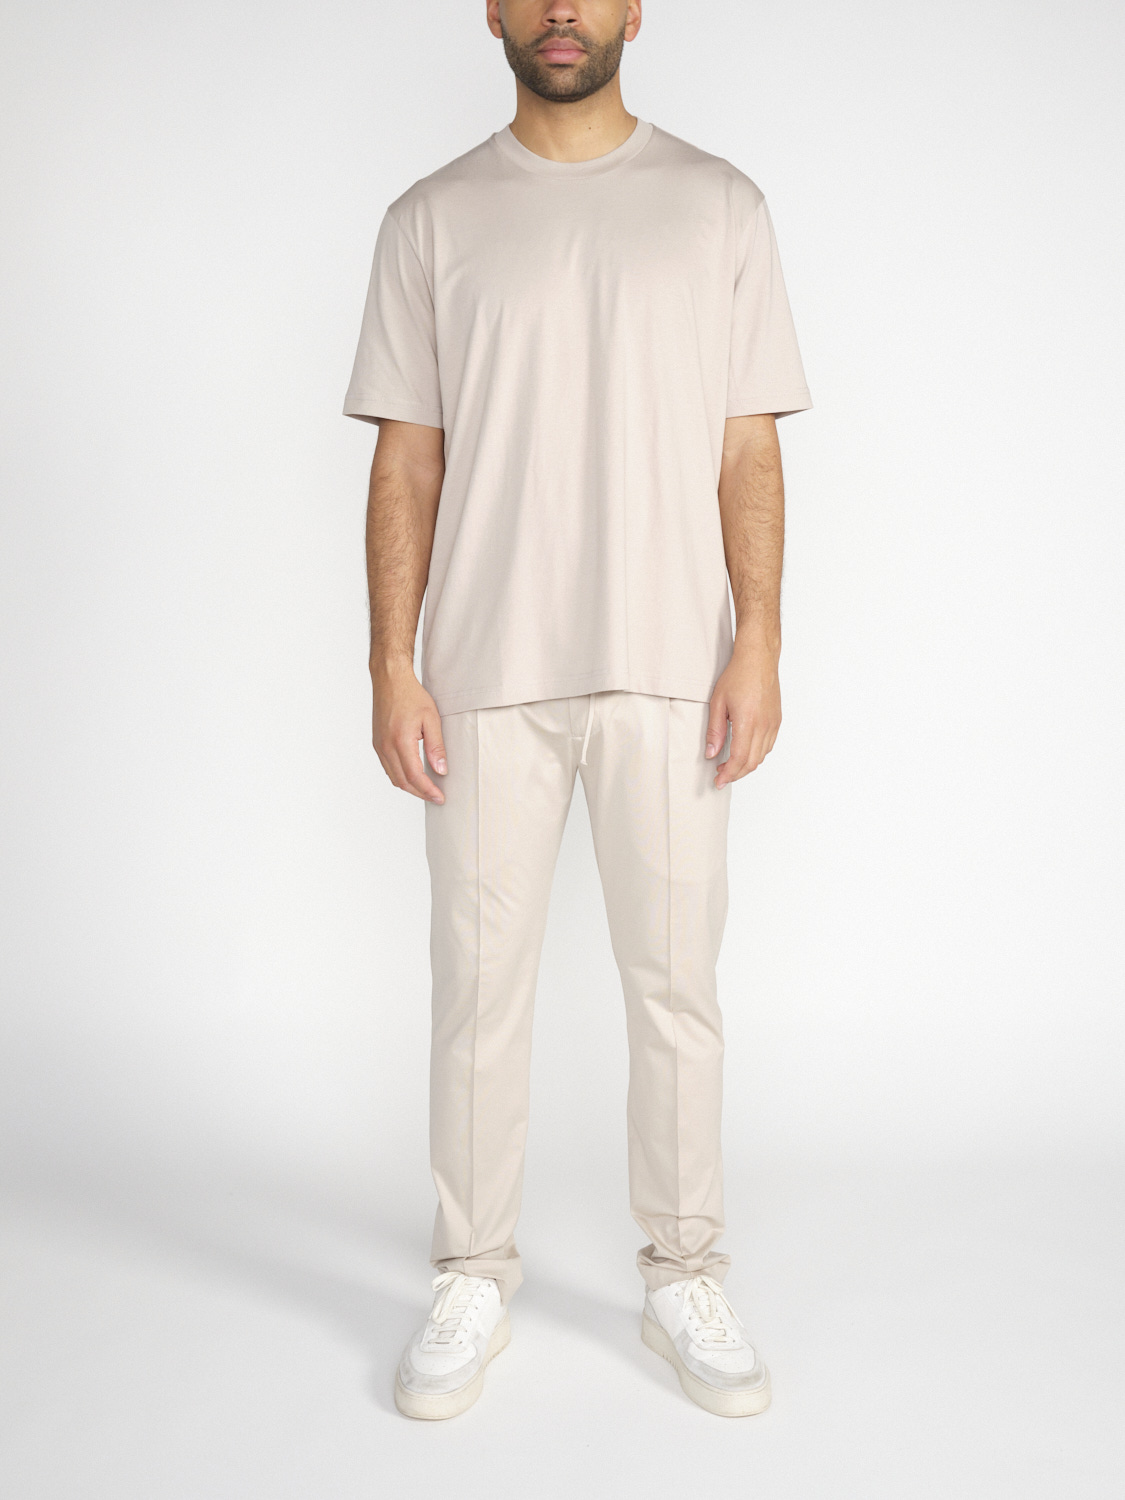 Stefan Brandt Eli 30 – Baumwoll-Shirt   beige M